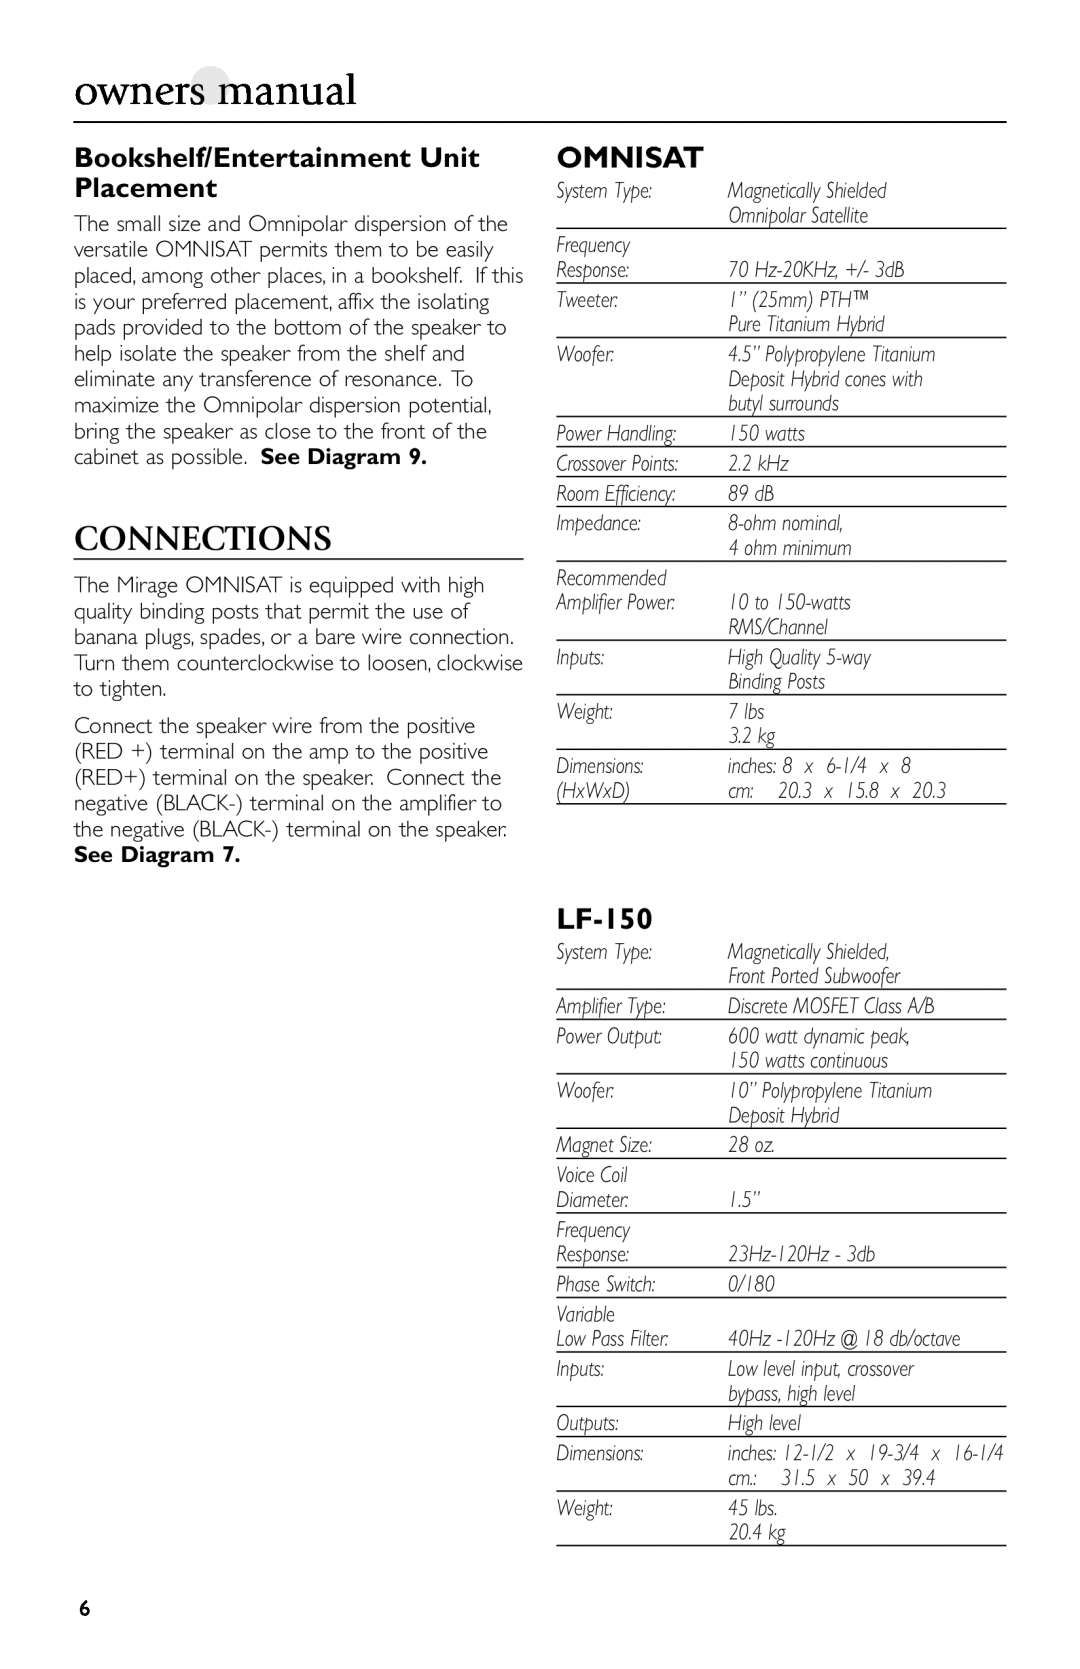 Mirage Loudspeakers Omnisat owner manual LF-150, Bookshelf/Entertainment Unit Placement, See Diagram 